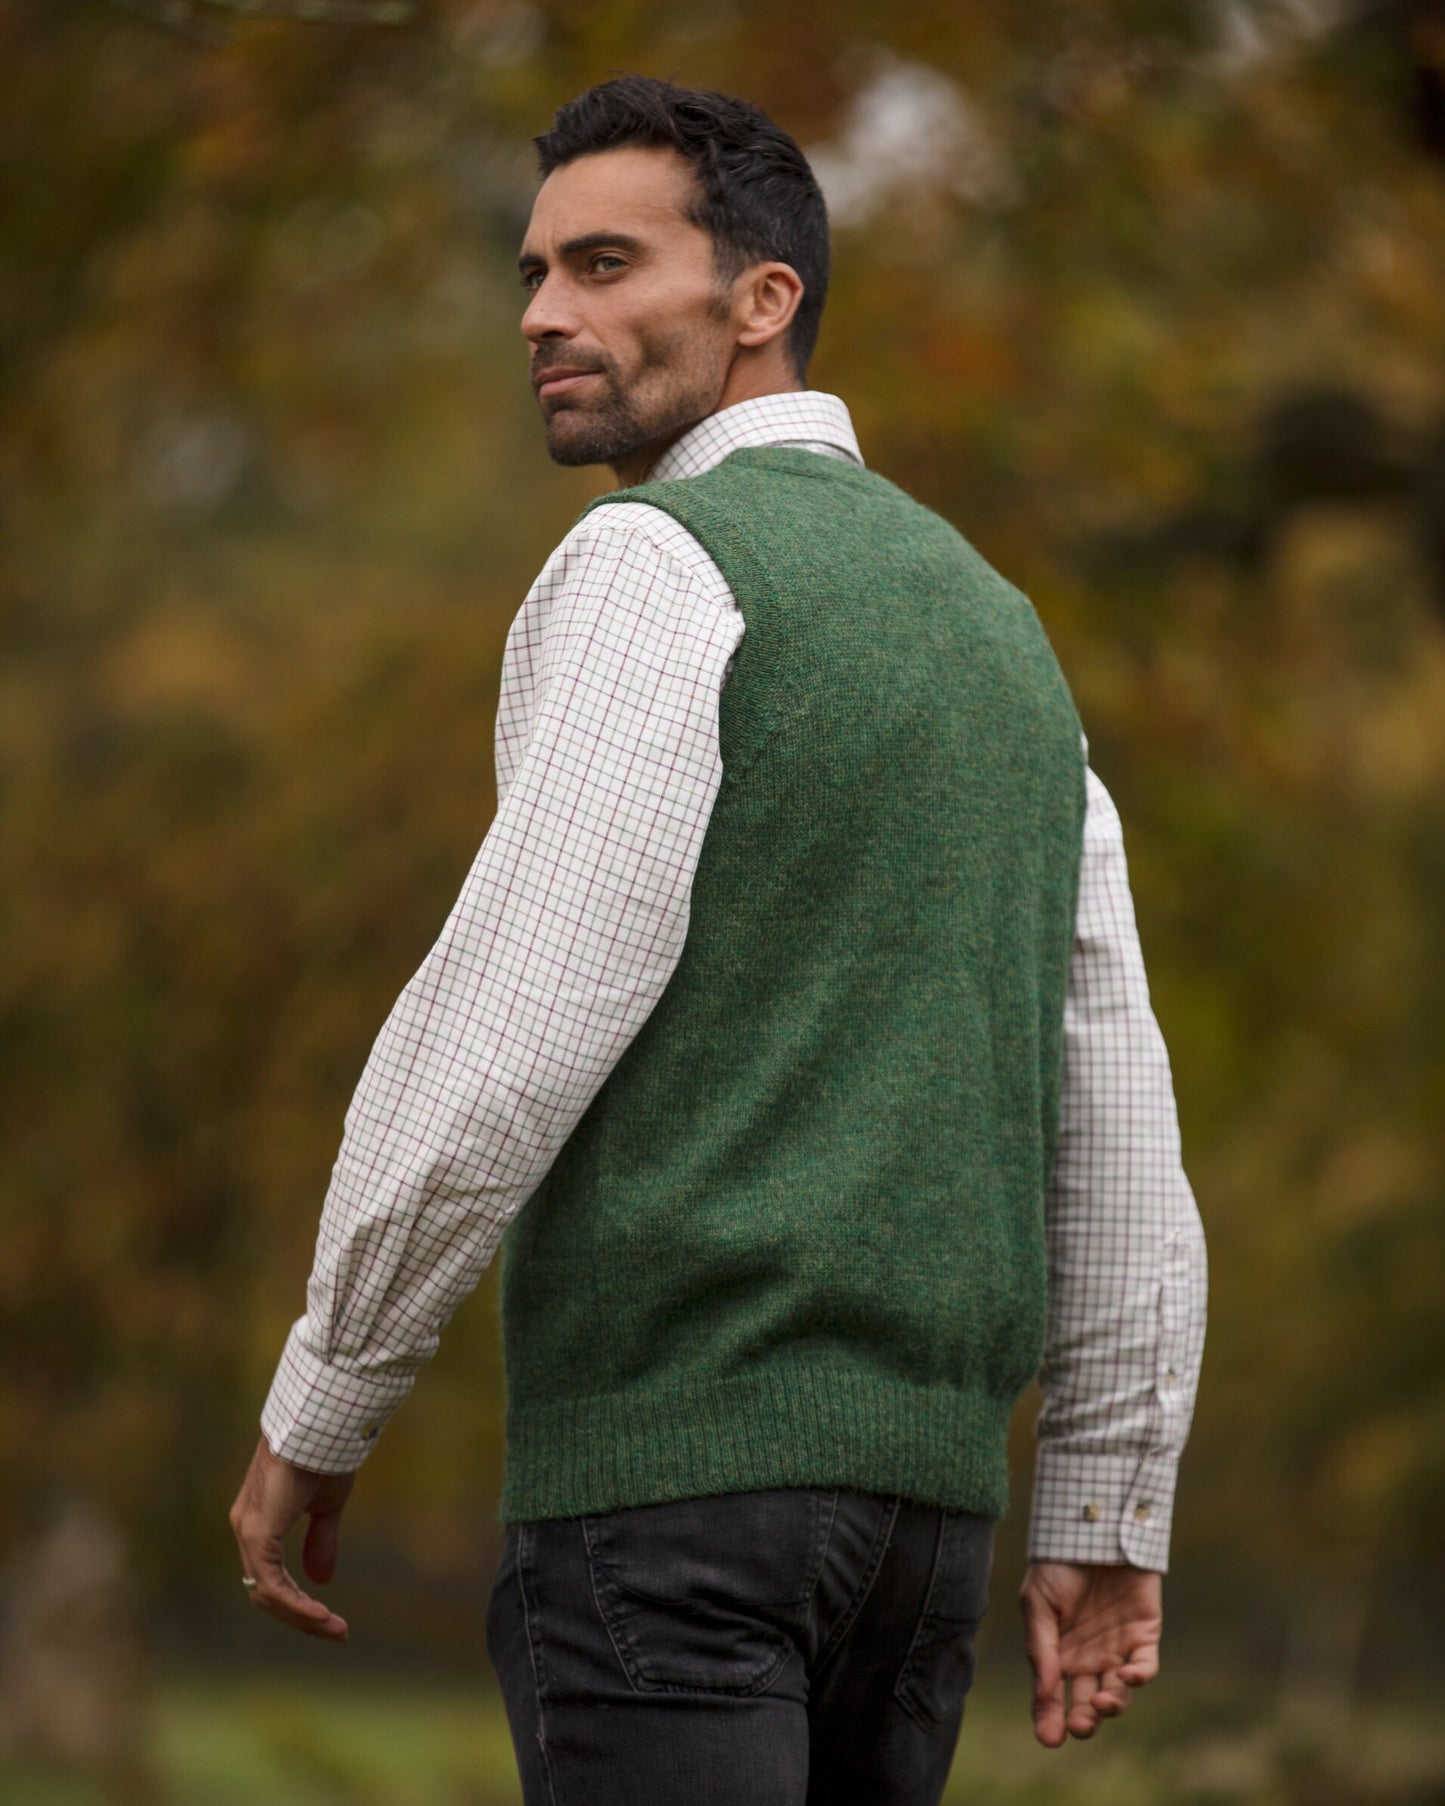 Waistcoat alpaca wool vest knitted warm men's sleeveless sweater knit pullover 100% alpaca fibre, luxury natural fibres, plastic free.